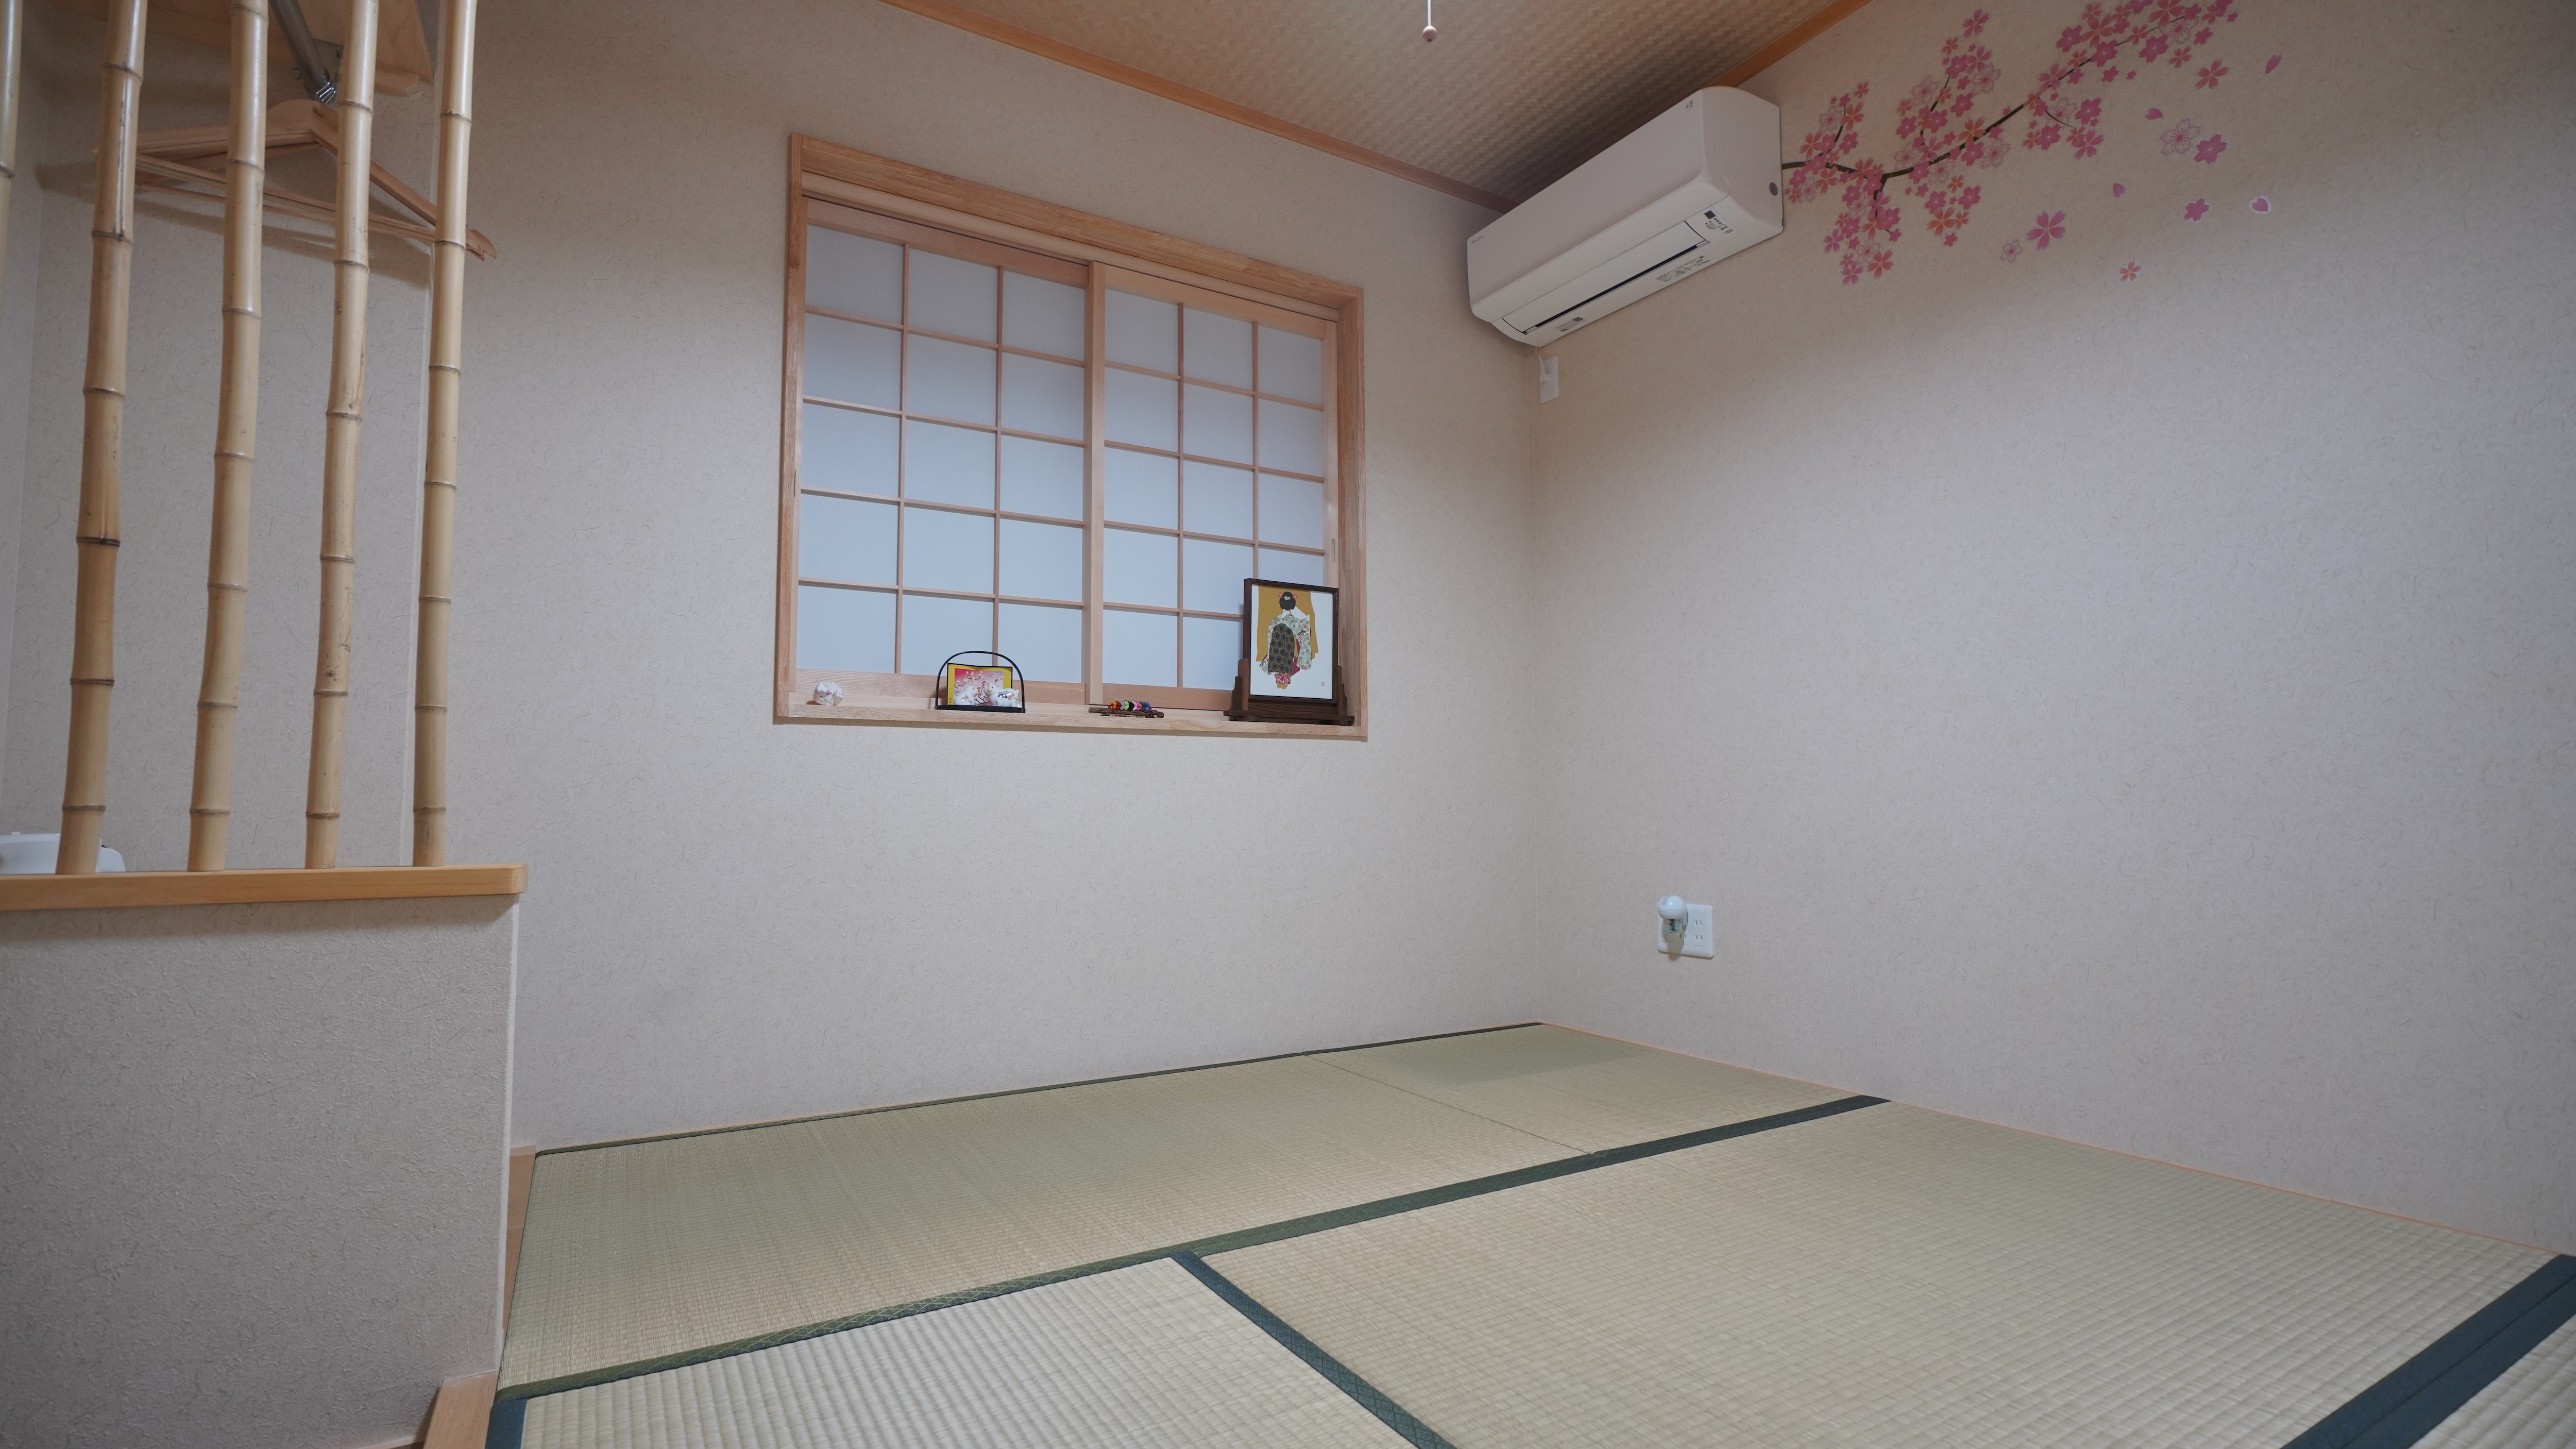 Kamar double bergaya Jepang di lantai pertama